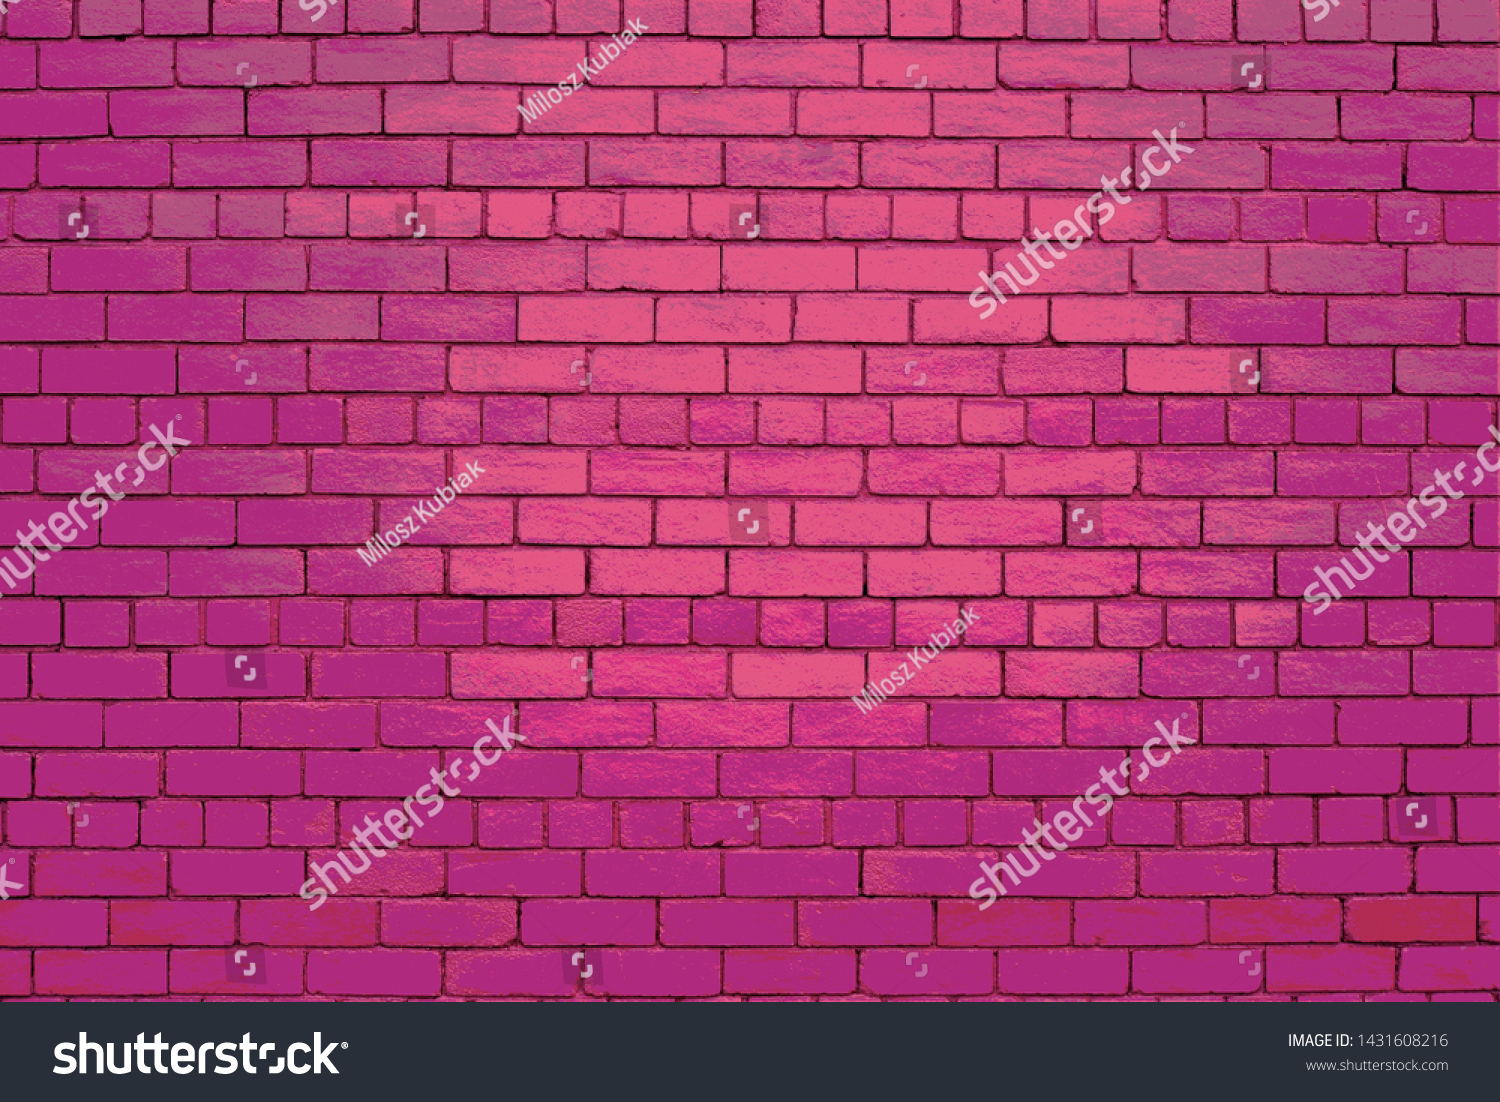  A Pink brick wall background. #1431608216